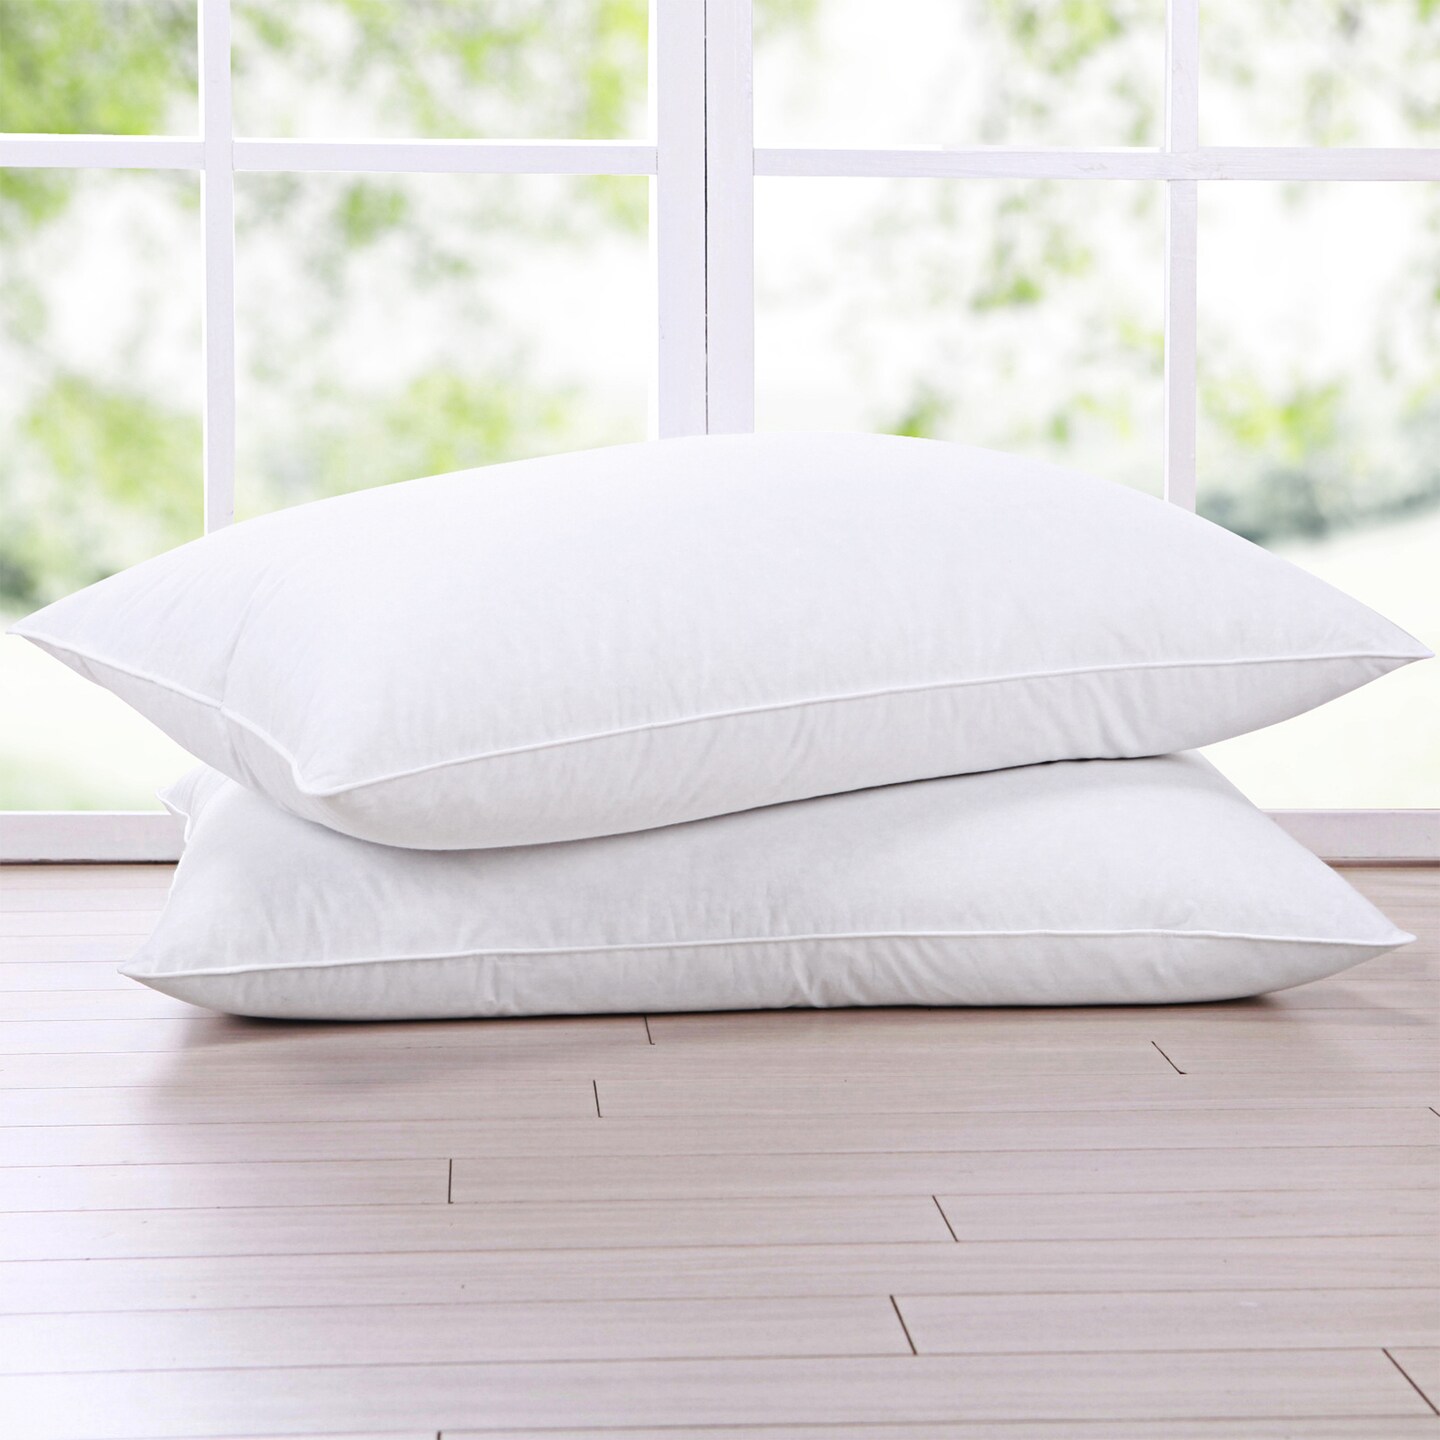 Premium White Goose Down Pillow for Sleeping, Pillow-in-a- Pillow